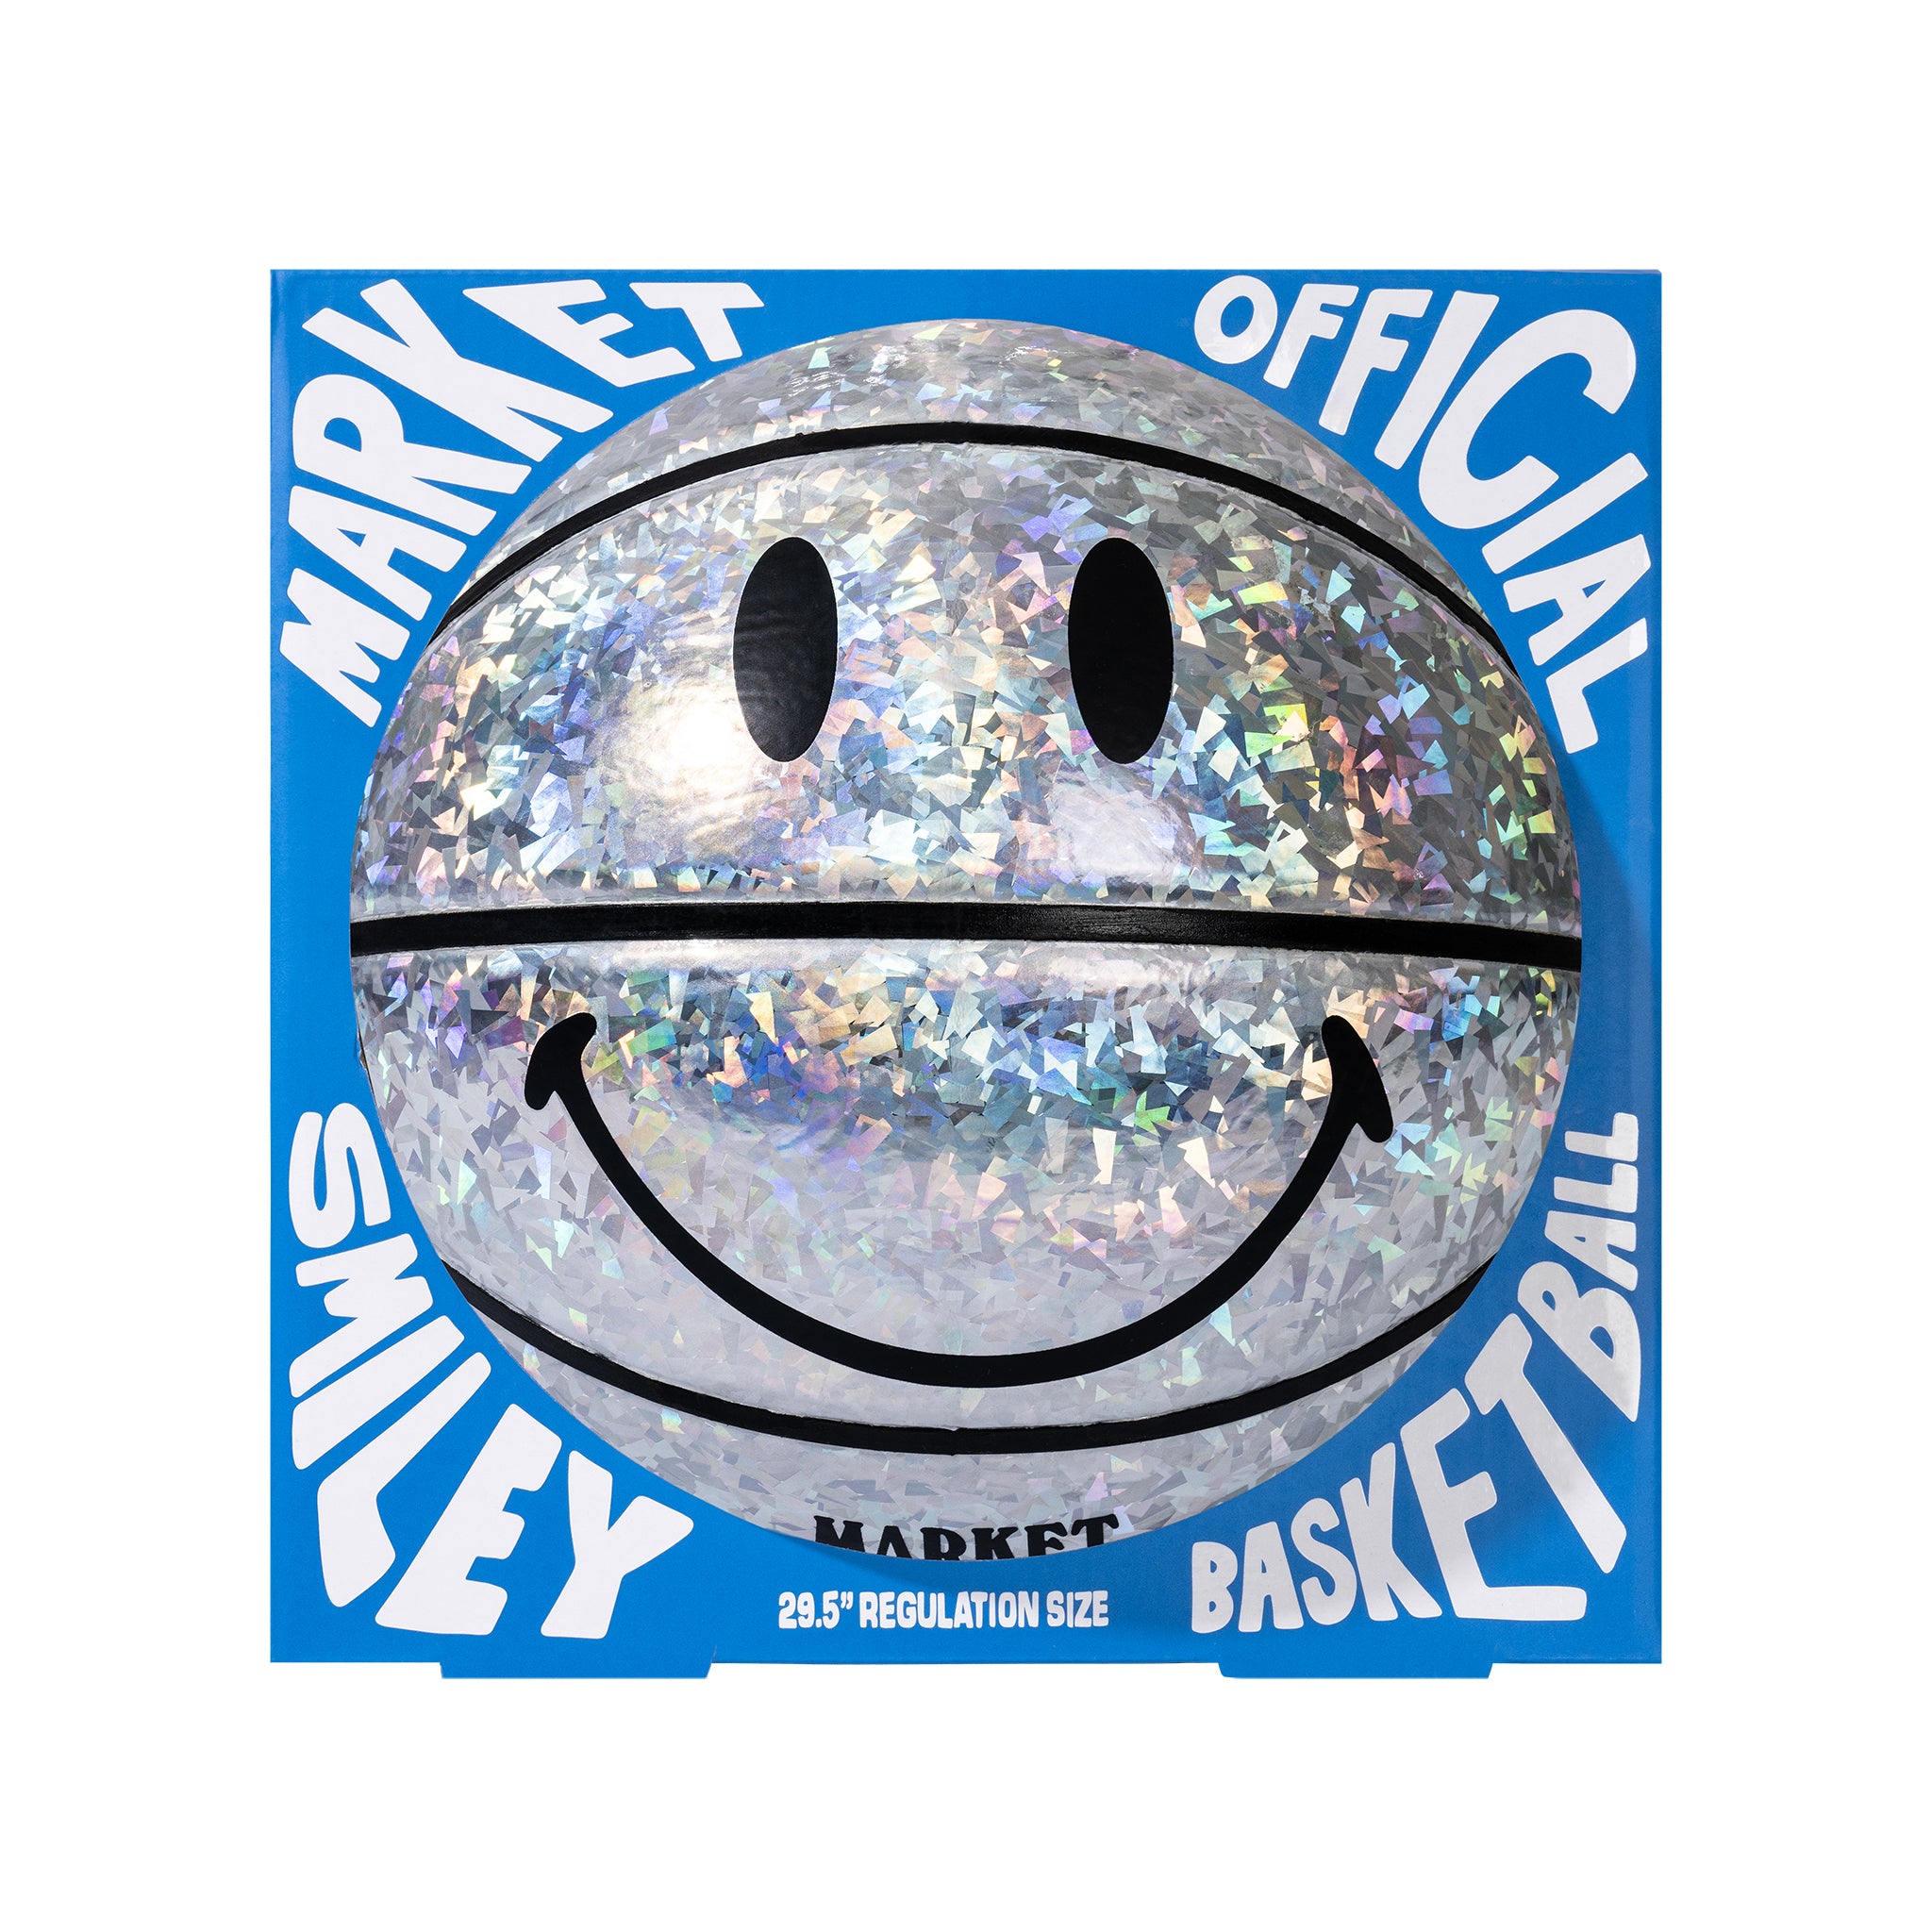 PURCHASE THE SMILEY HOLOGRAM BASKETBALL ONLINE | MARKET STUDIOS – Market